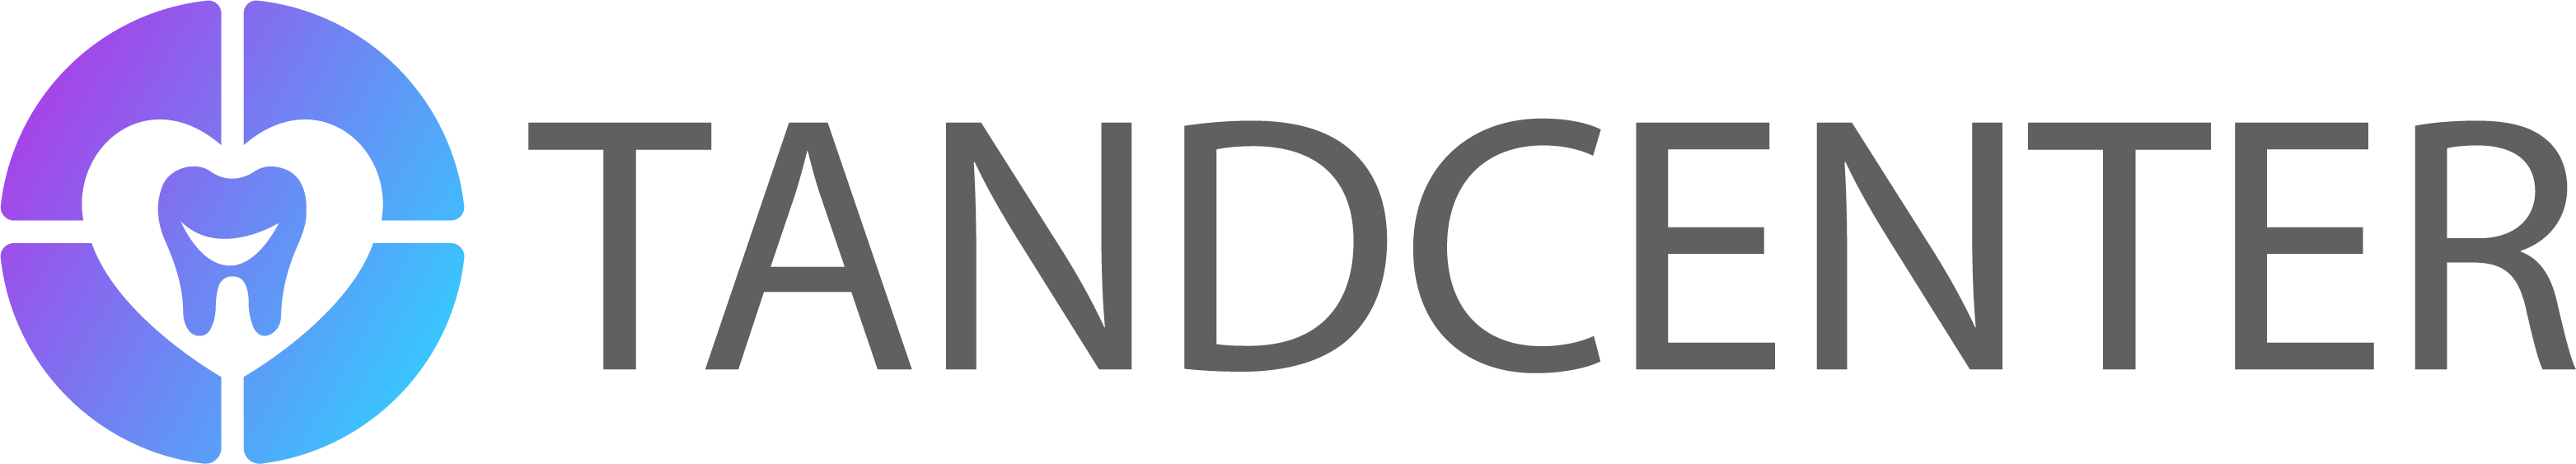 tandcenter-logotyp